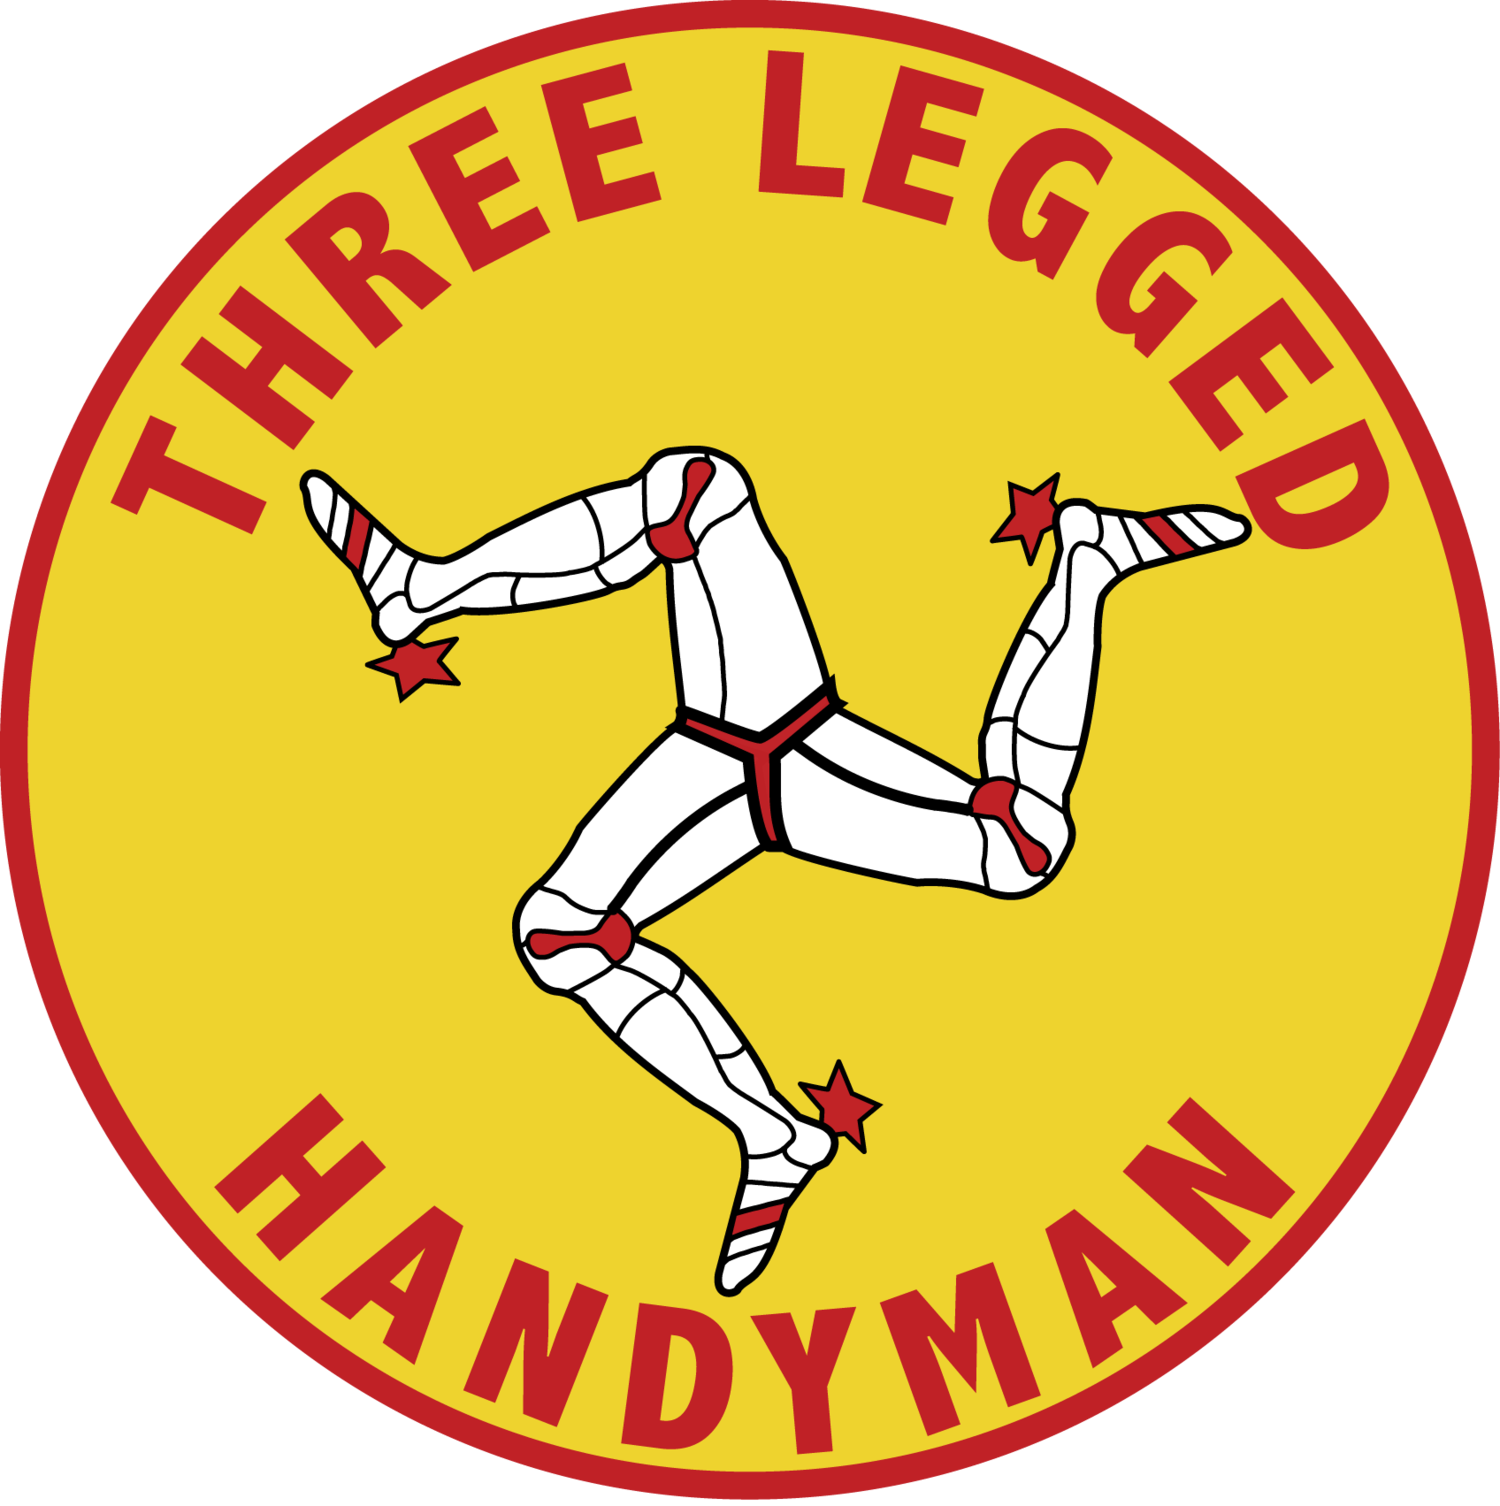 Three Legged Handyman - Mississauga Handyman Services